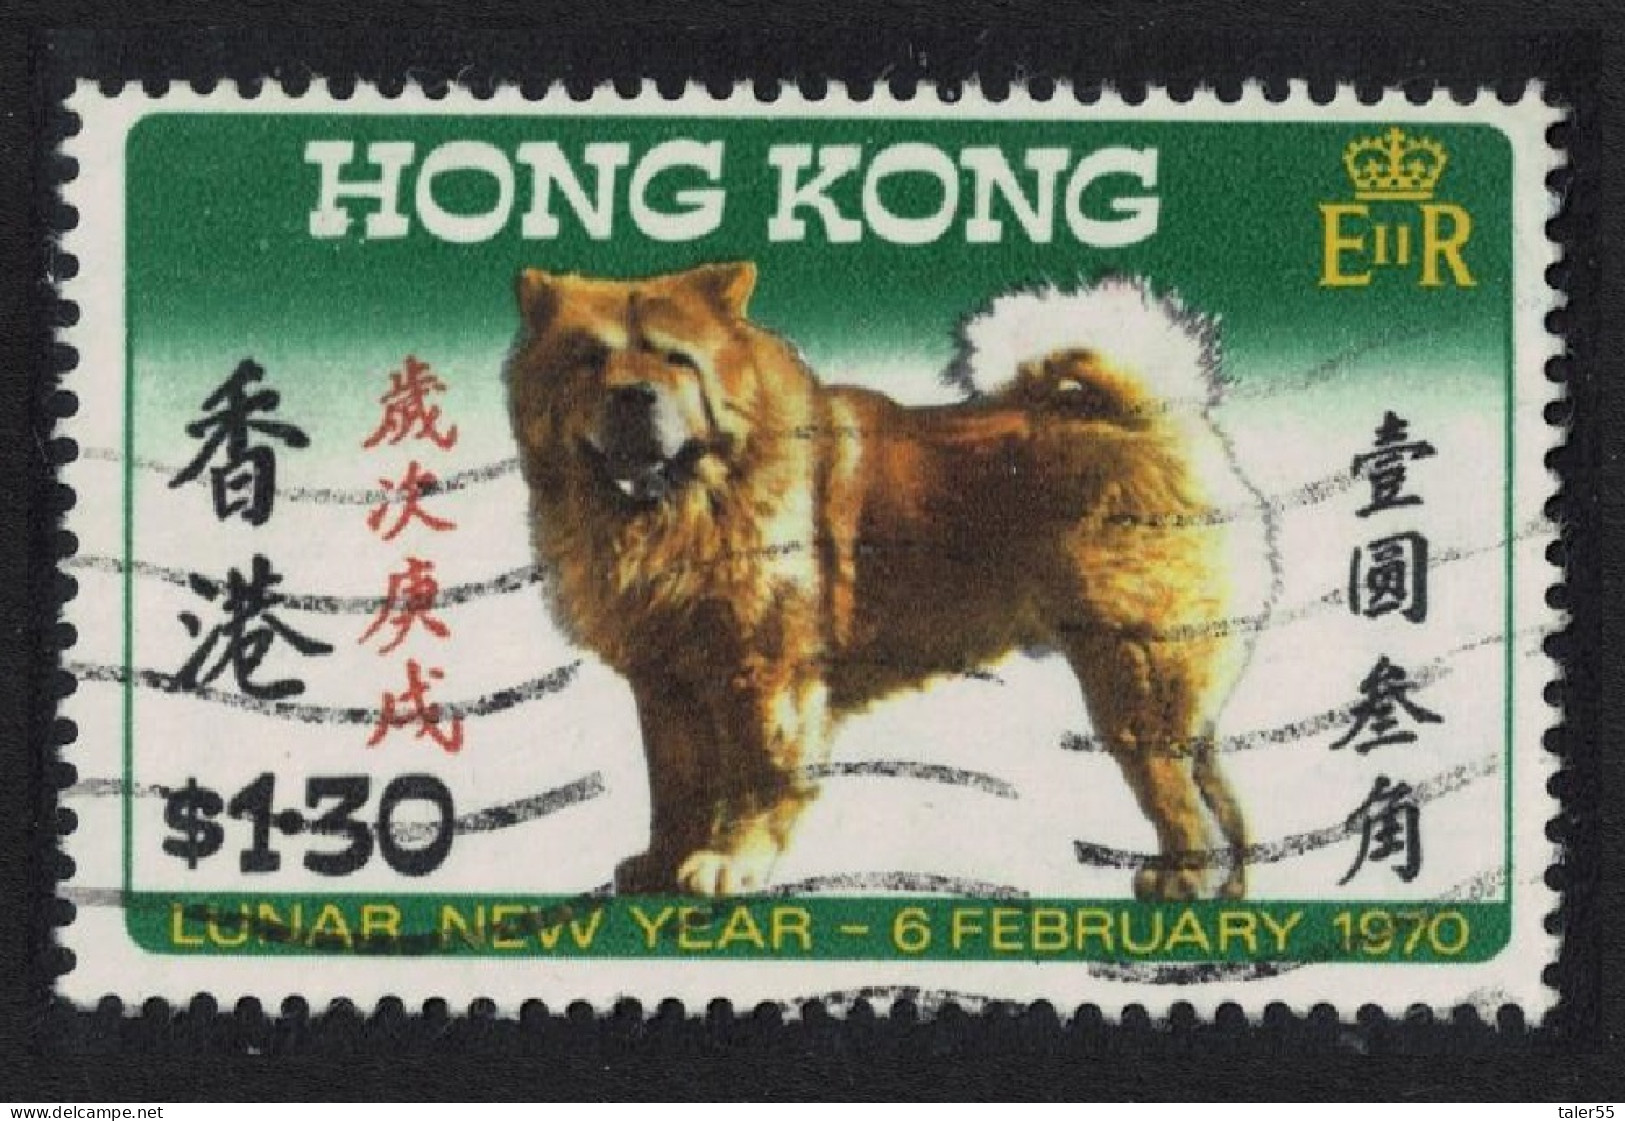 Hong Kong Chinese New Year. Year Of The Dog $1.30 1970 Canc SG#262 - Gebraucht